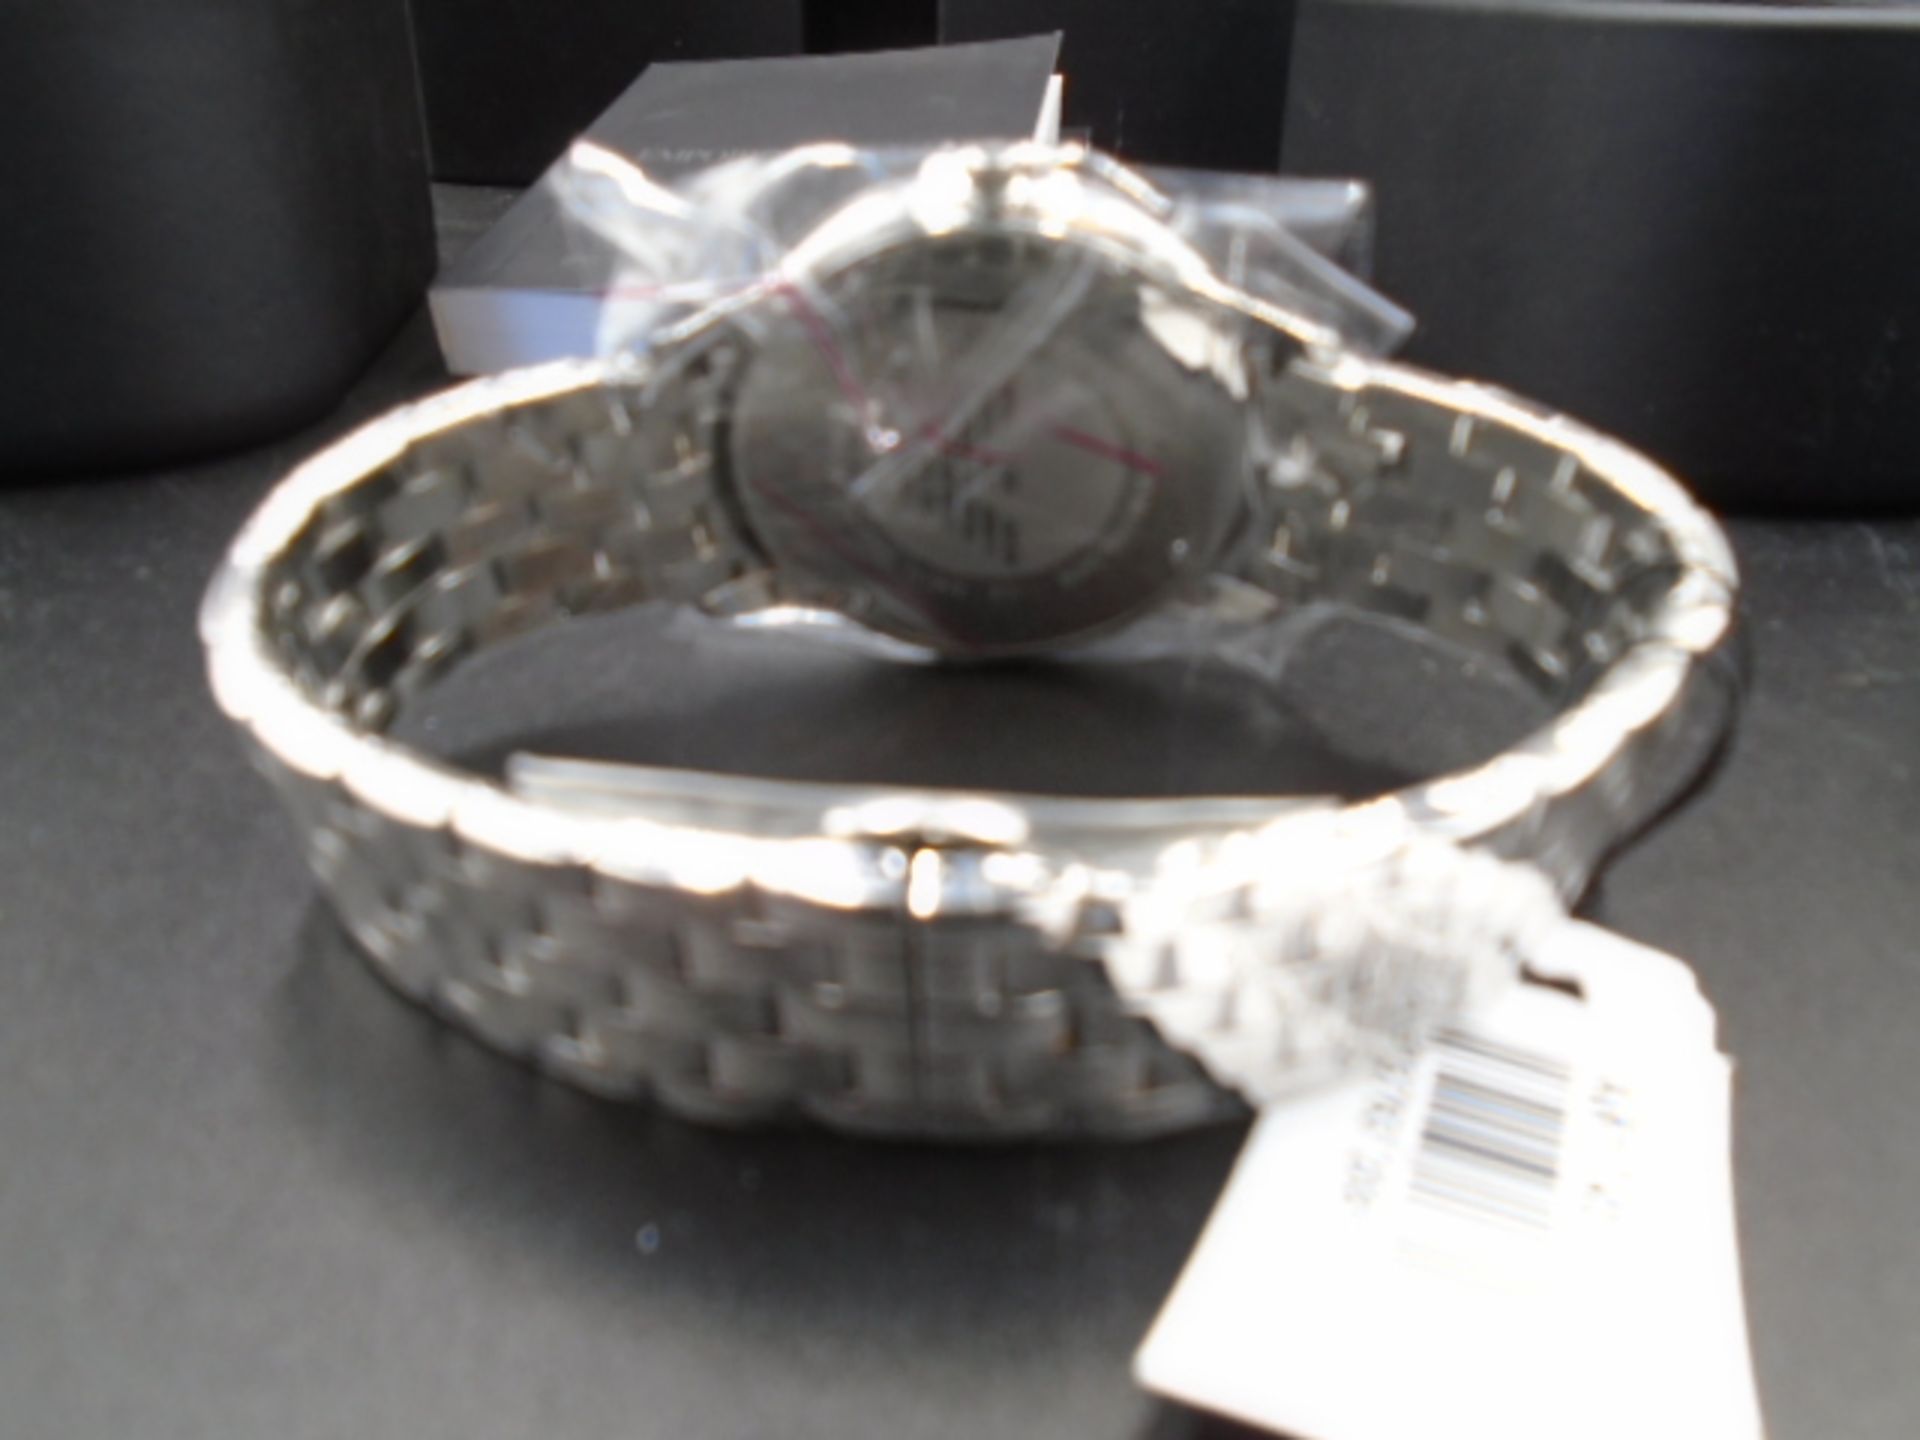 2 Emporio Armani watches - mens dino slim steel bracelet model AR 1745 and ladies quartz watch - Image 7 of 11